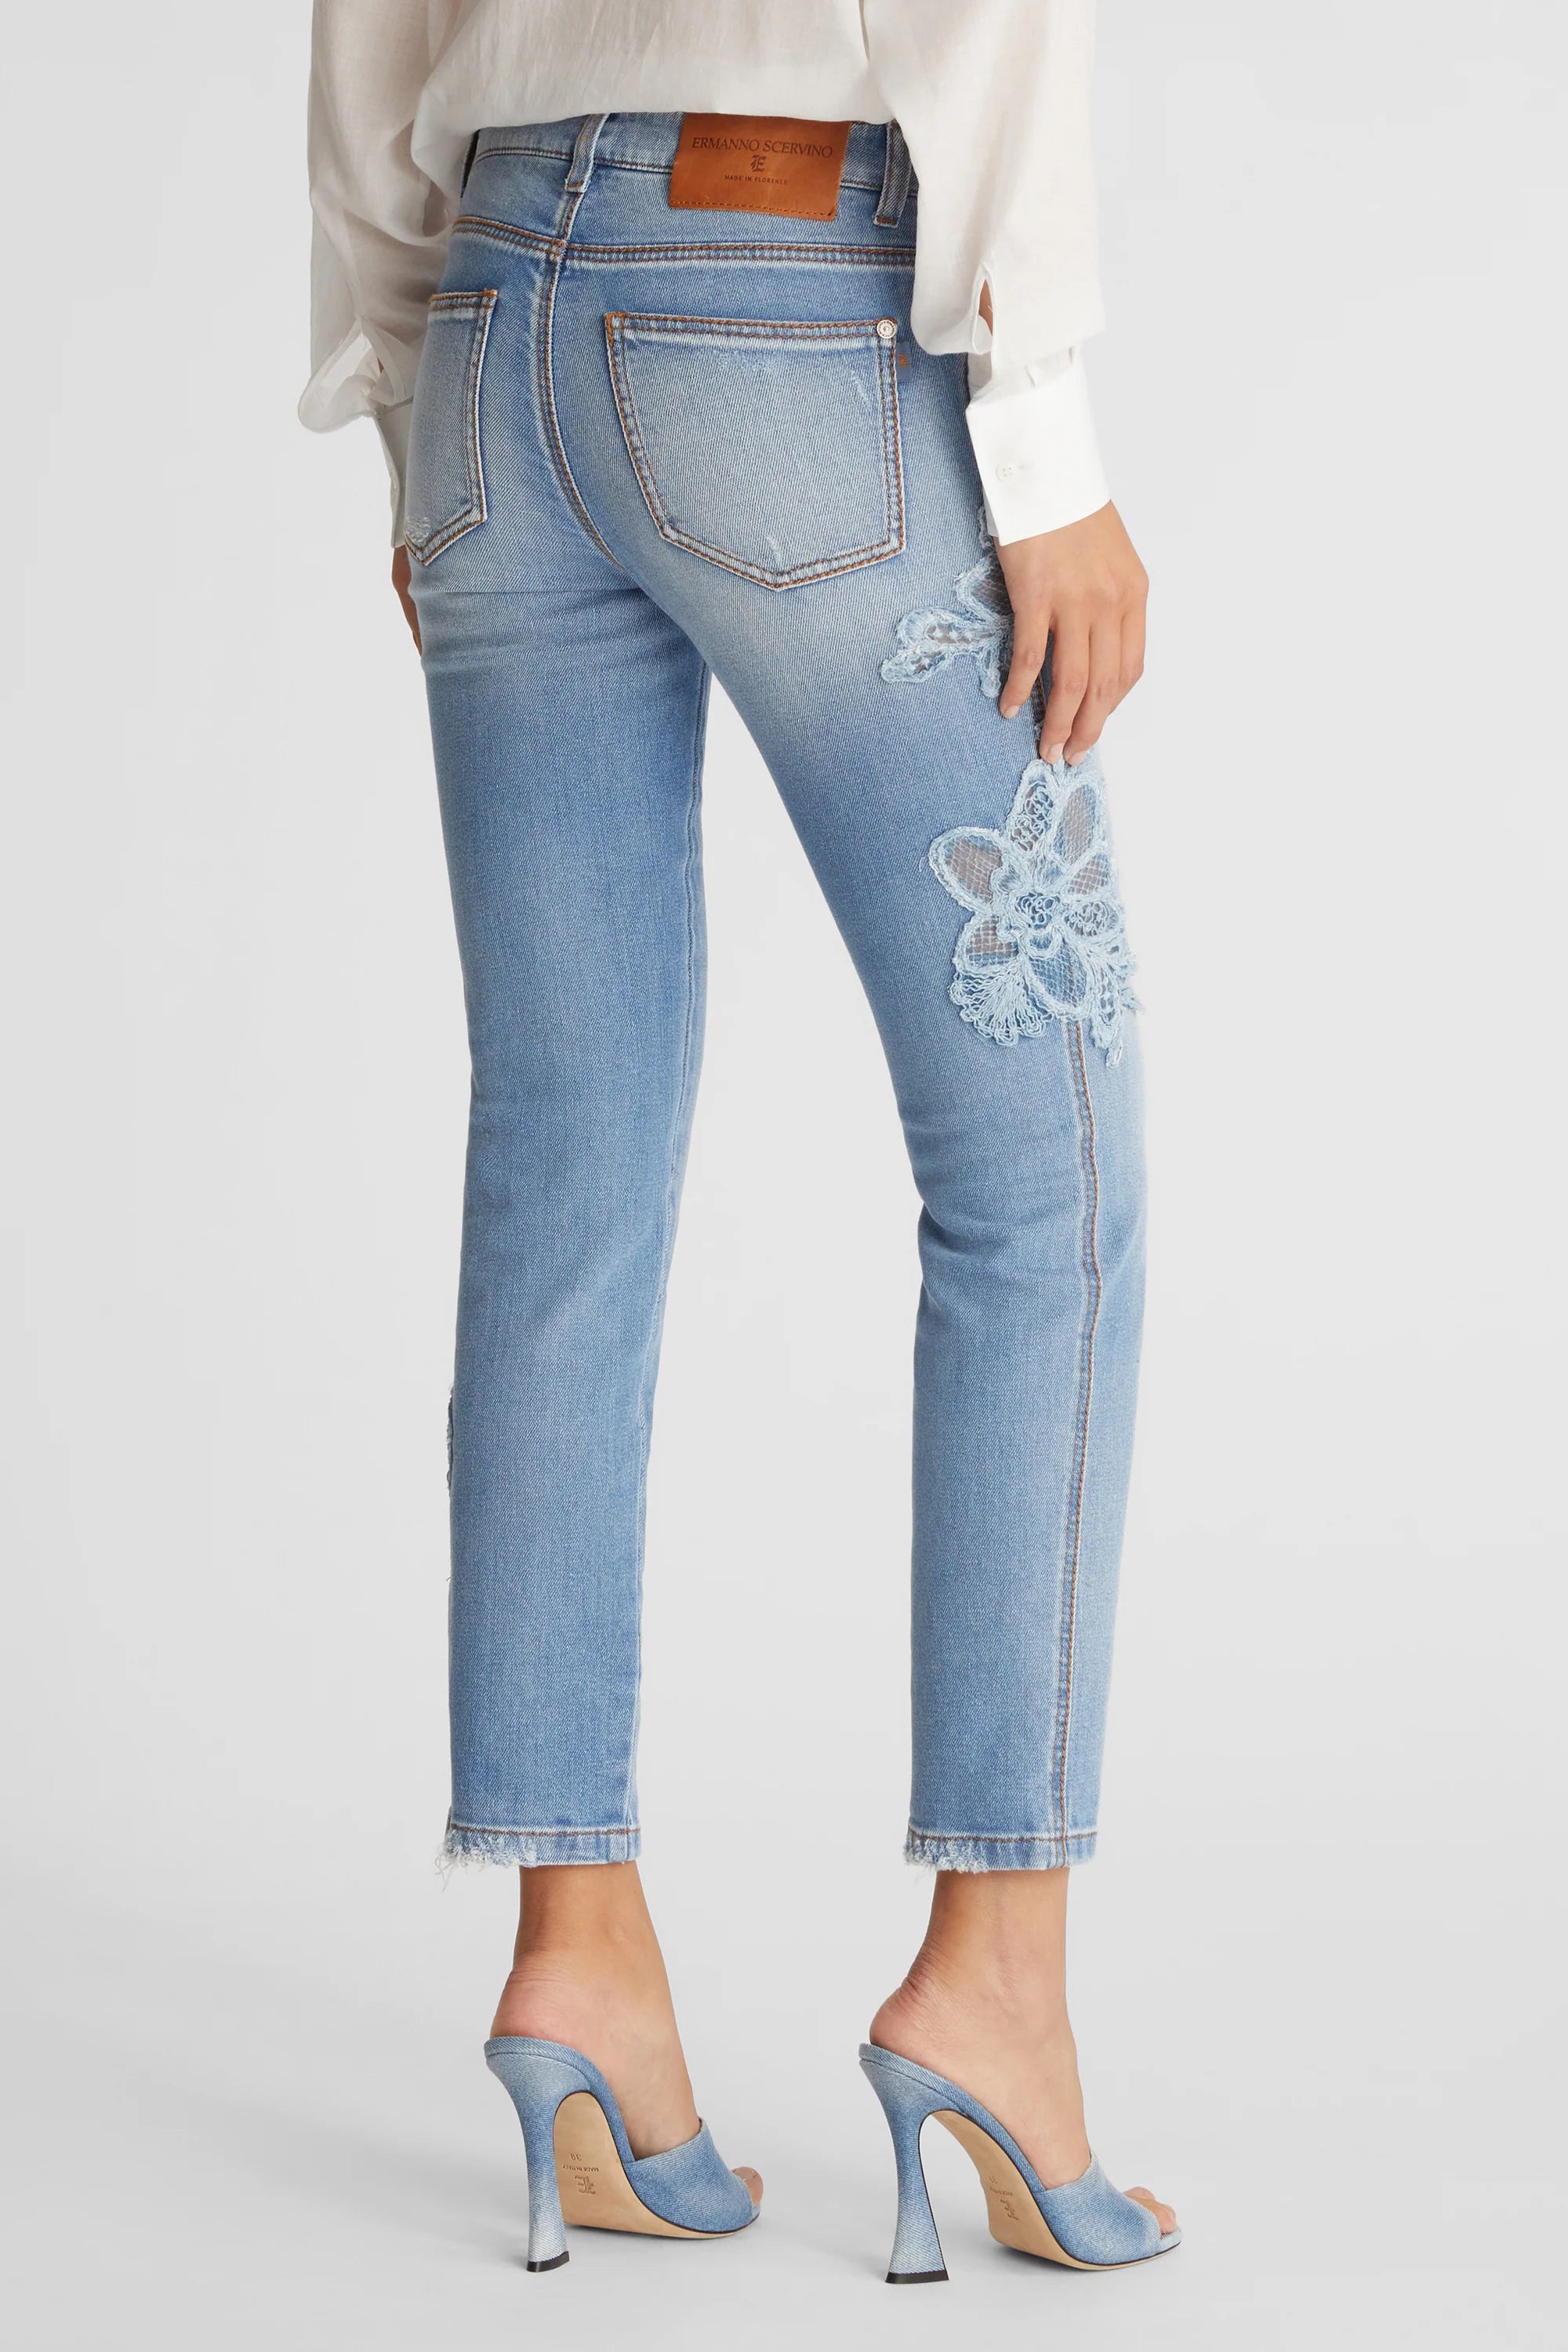 Ermanno Scervino skinny jeans